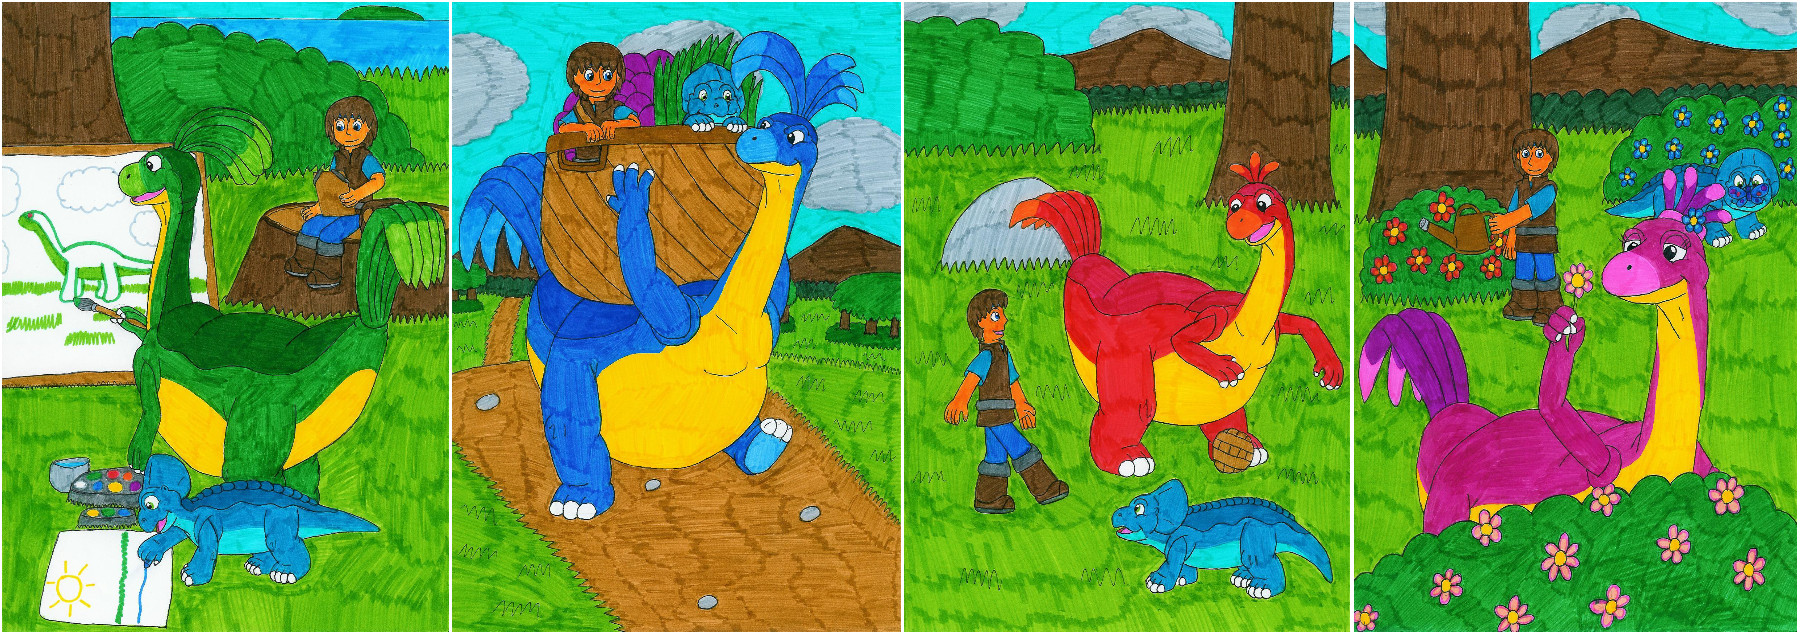 Adam and his Beipiaosaurus by MCsaurus on DeviantArt